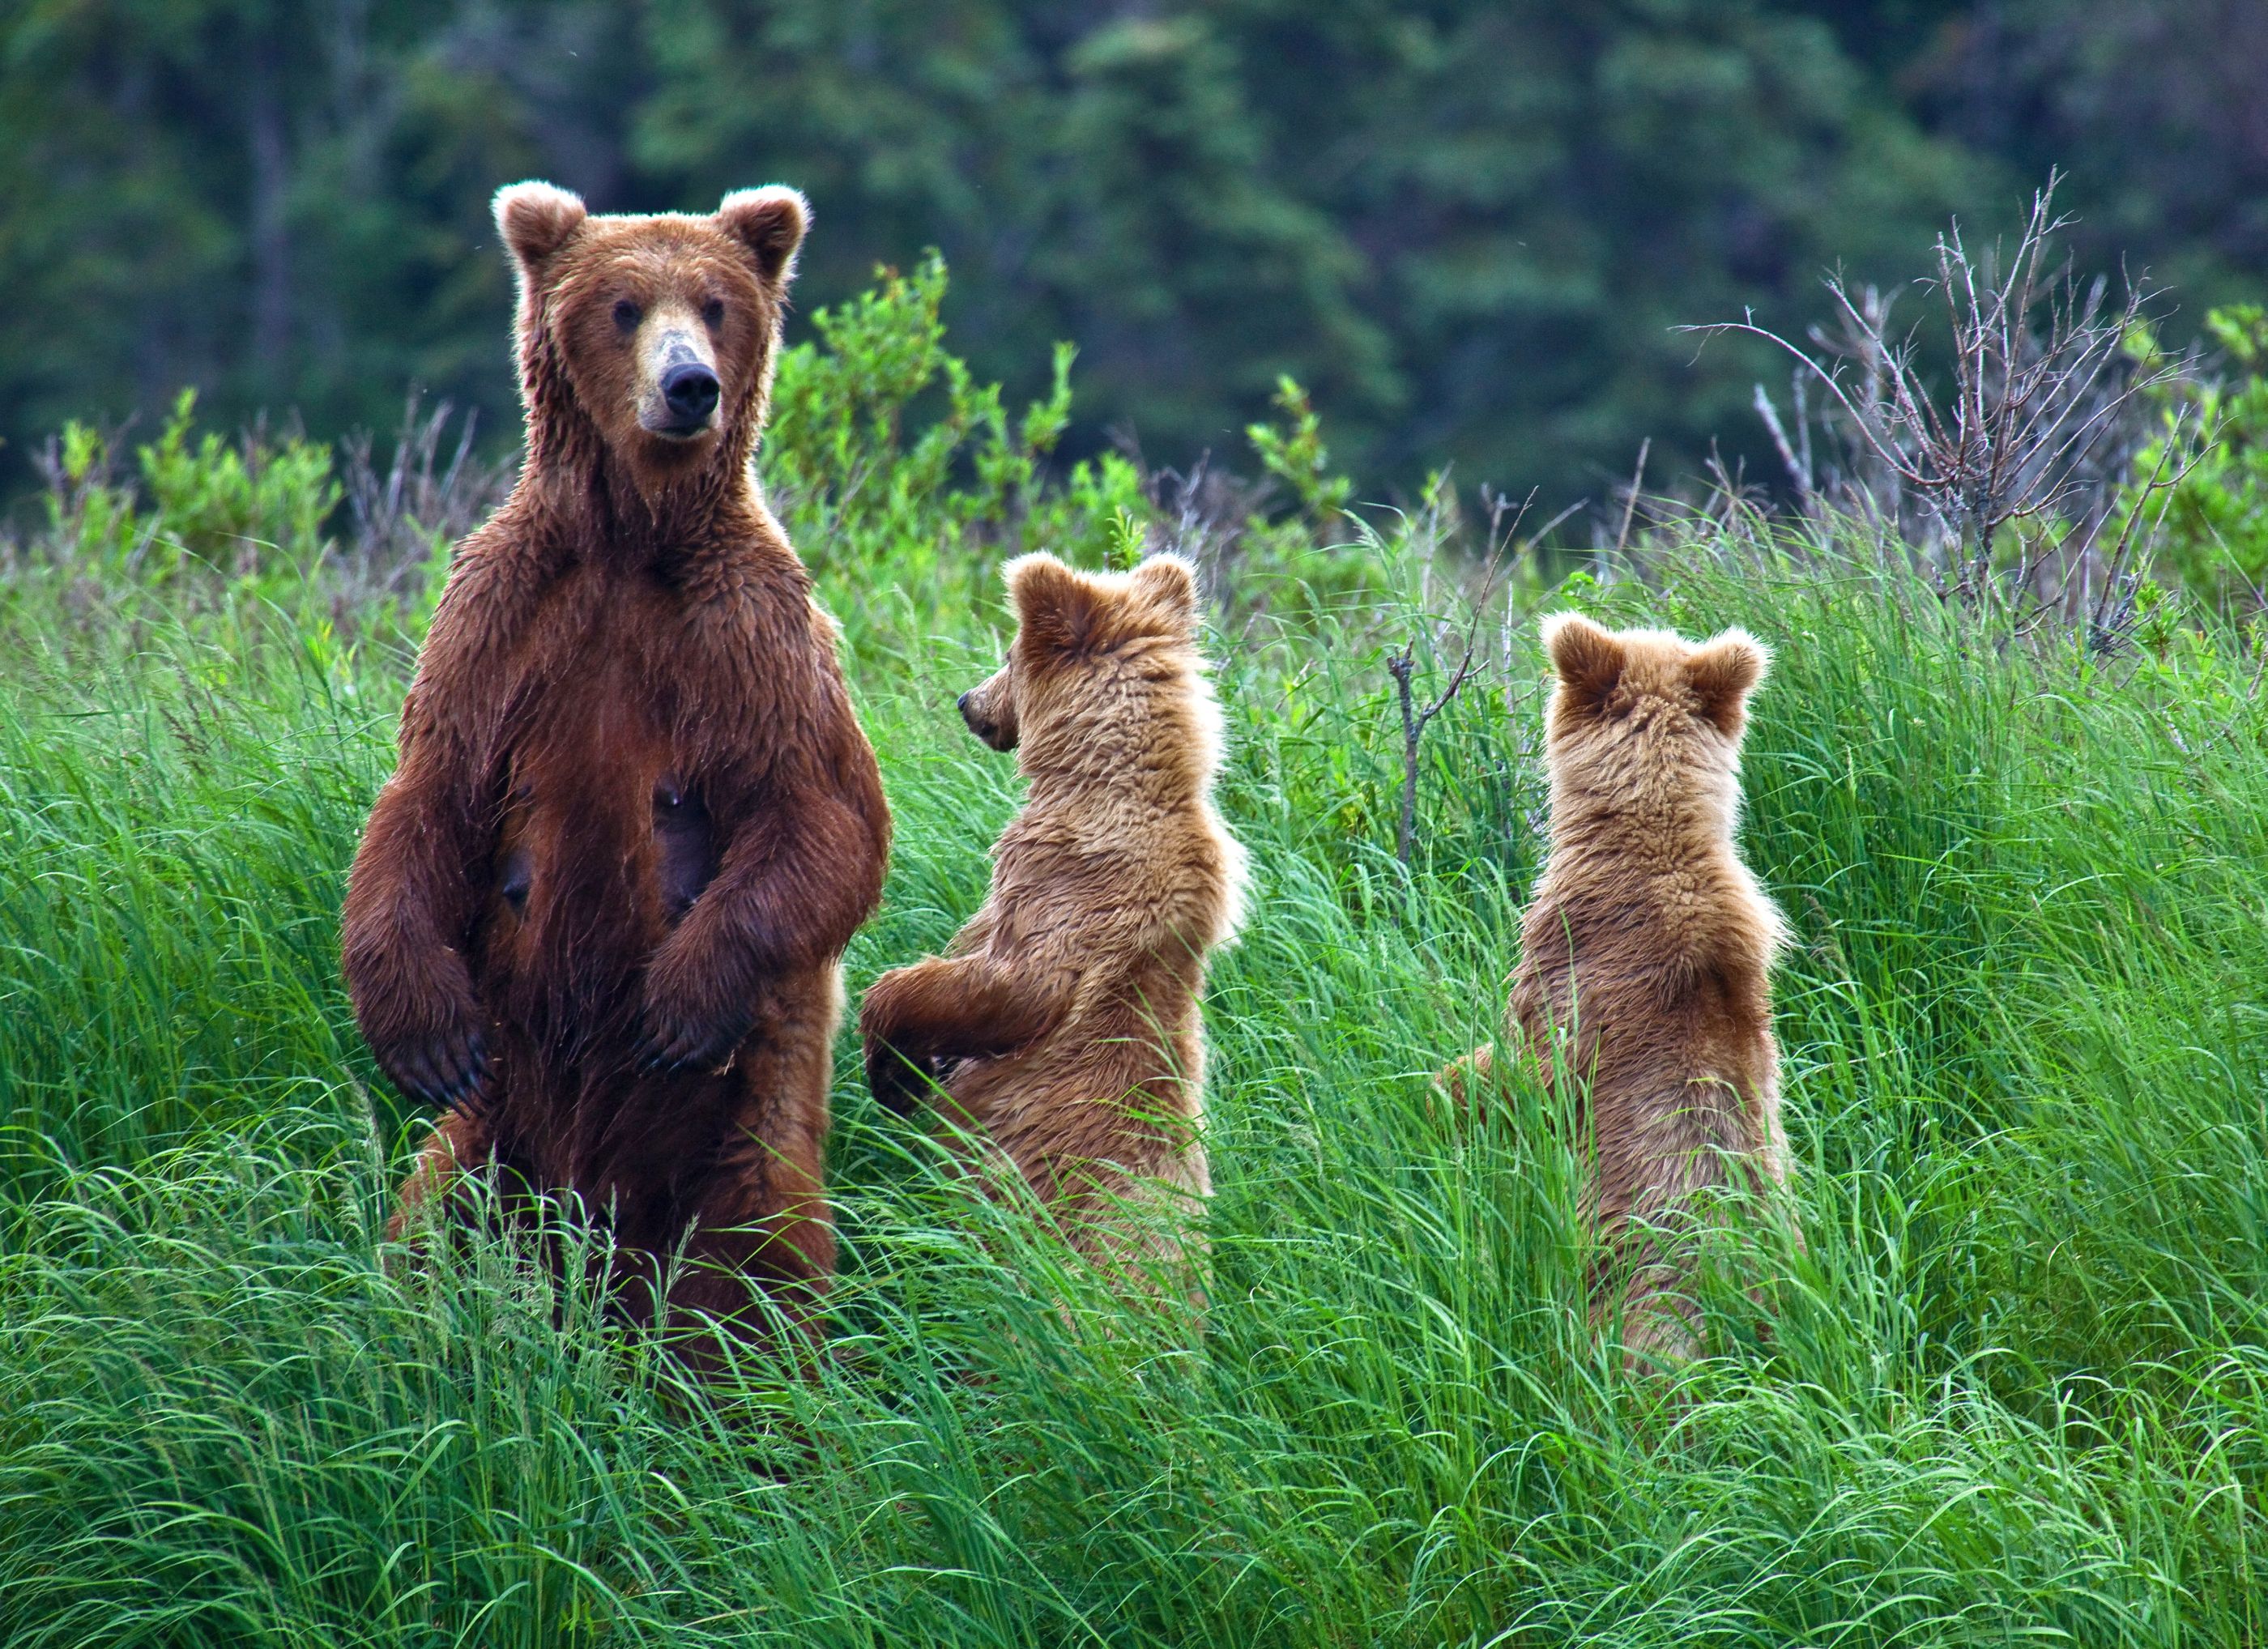 Bear family standing in high grass, USA